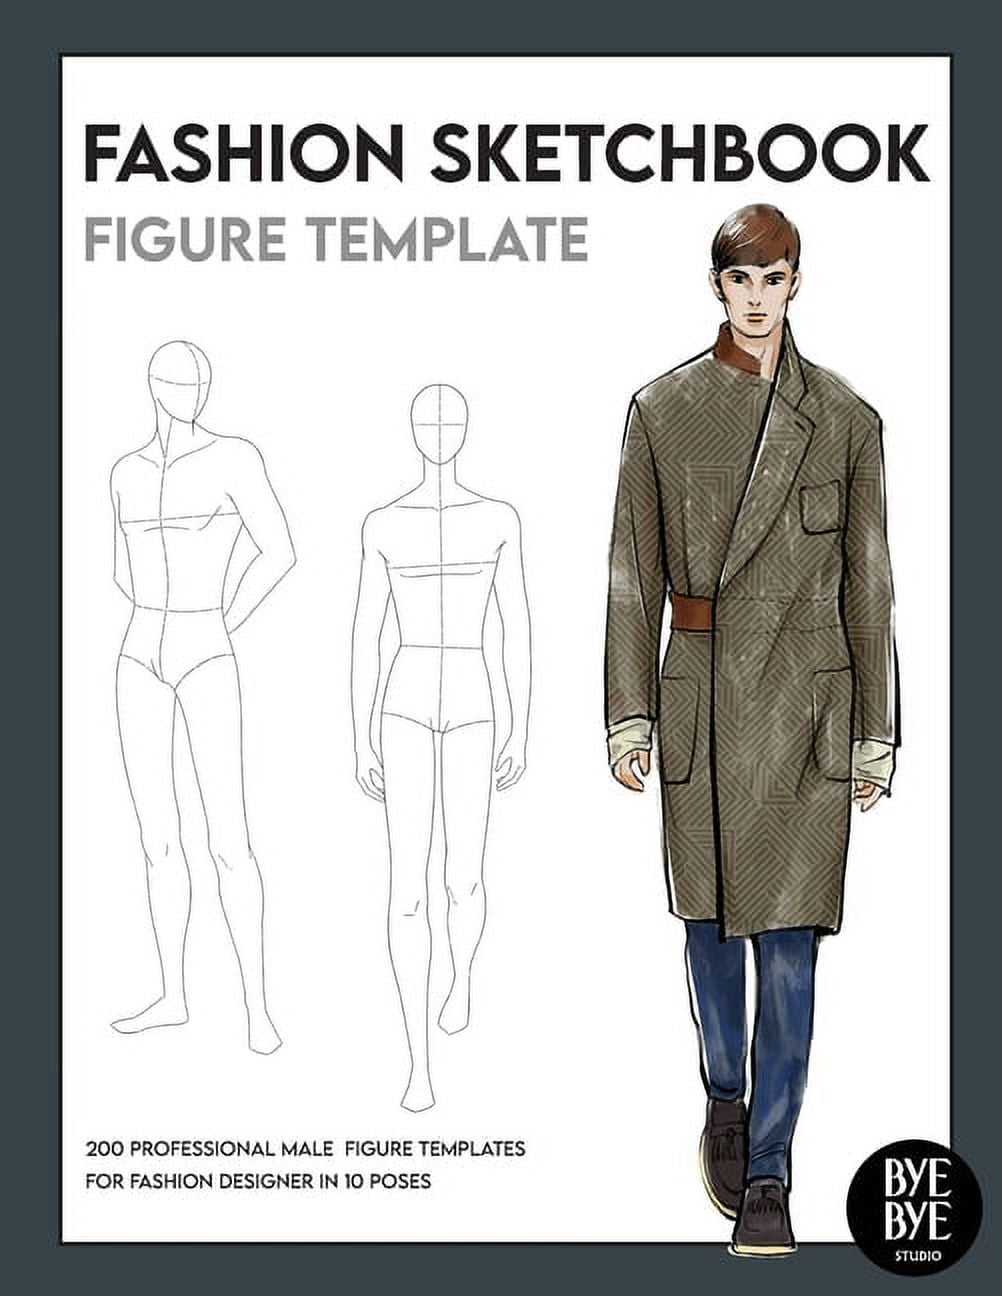 Fashion Sketchbook Male Figure Template: Over 200 male fashion